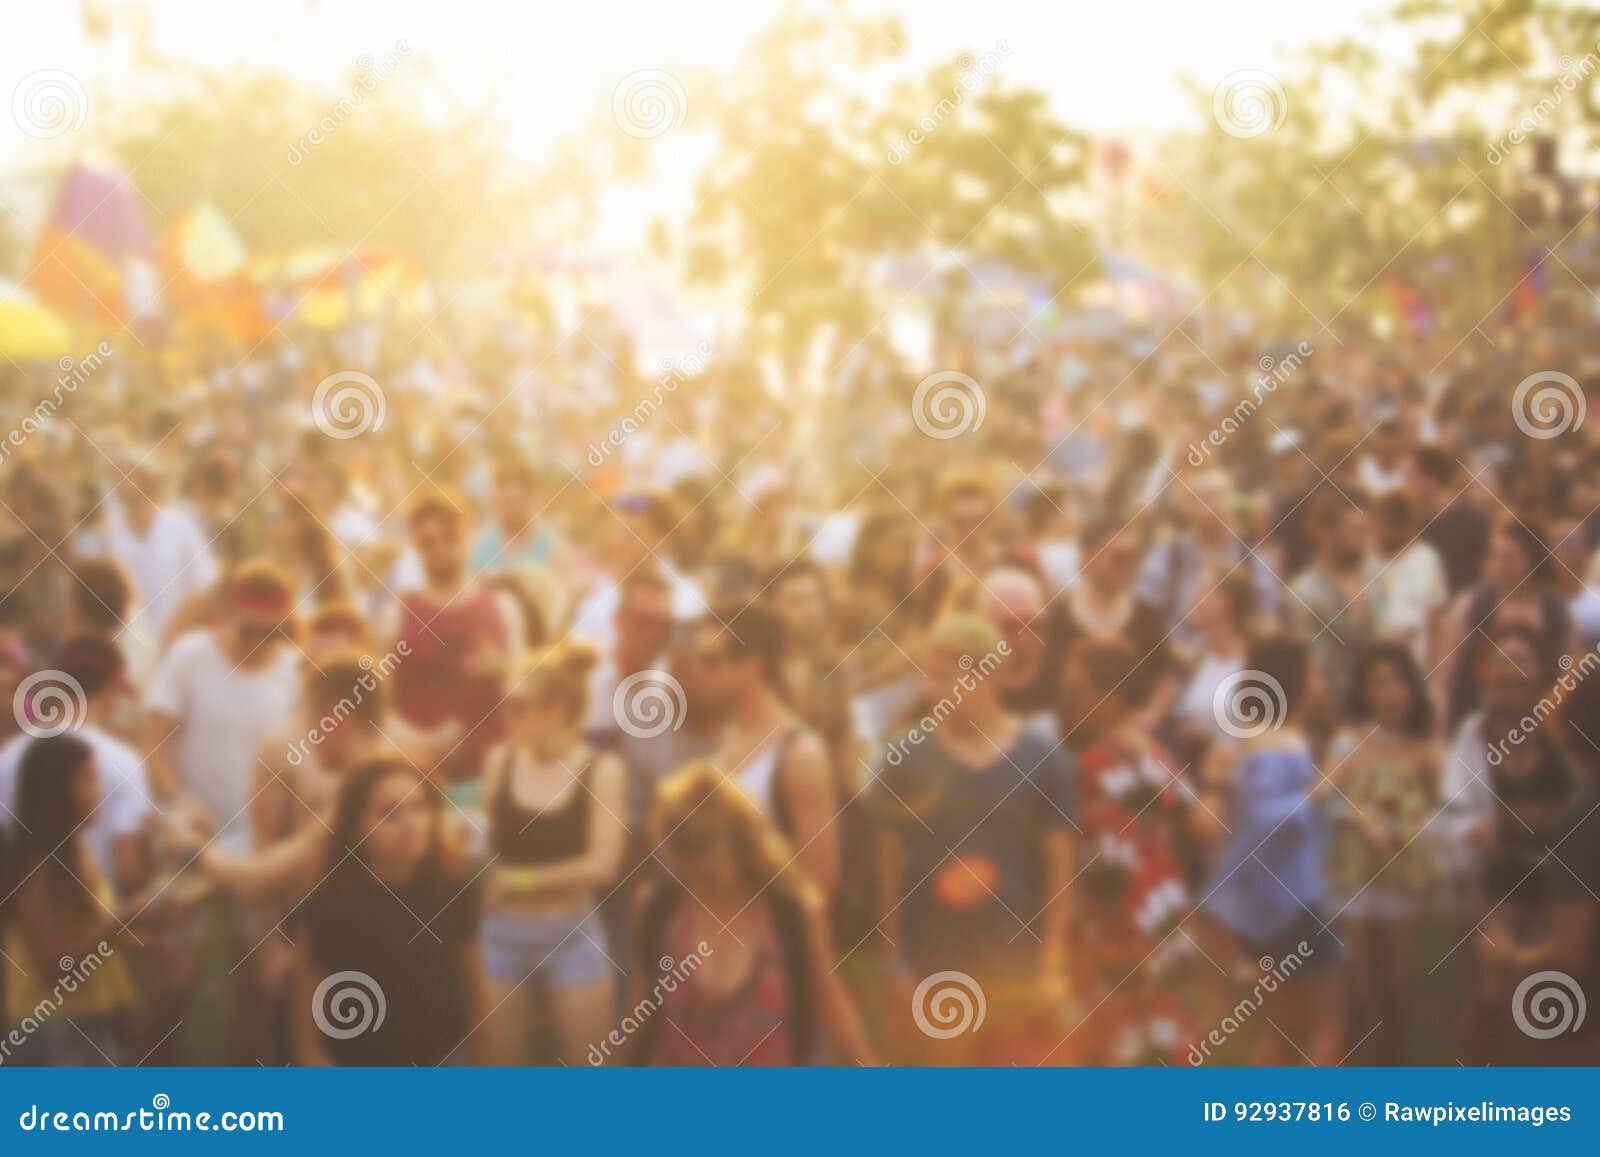 People Enjoying Live Music Concert Festival Stock Photo - Image of ...